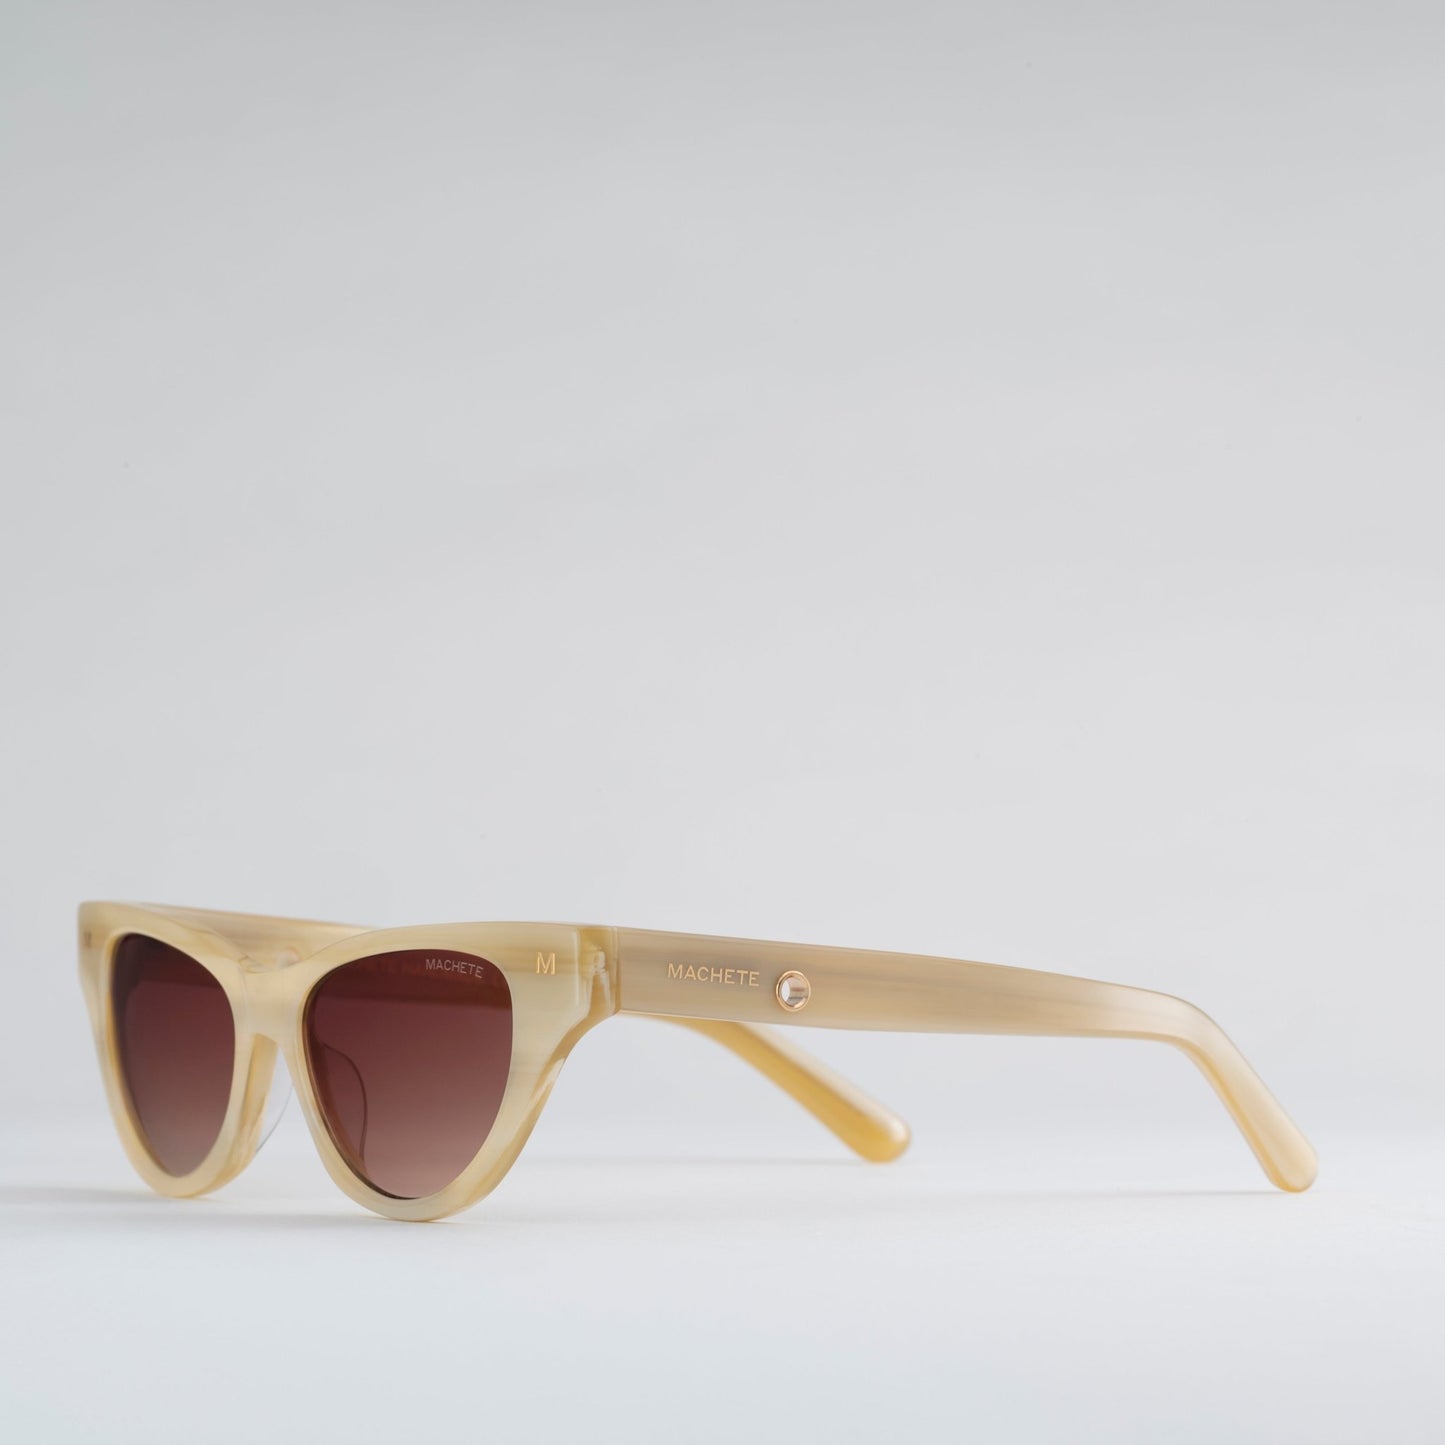 Suzy Sunglasses in Alabaster - MACHETE